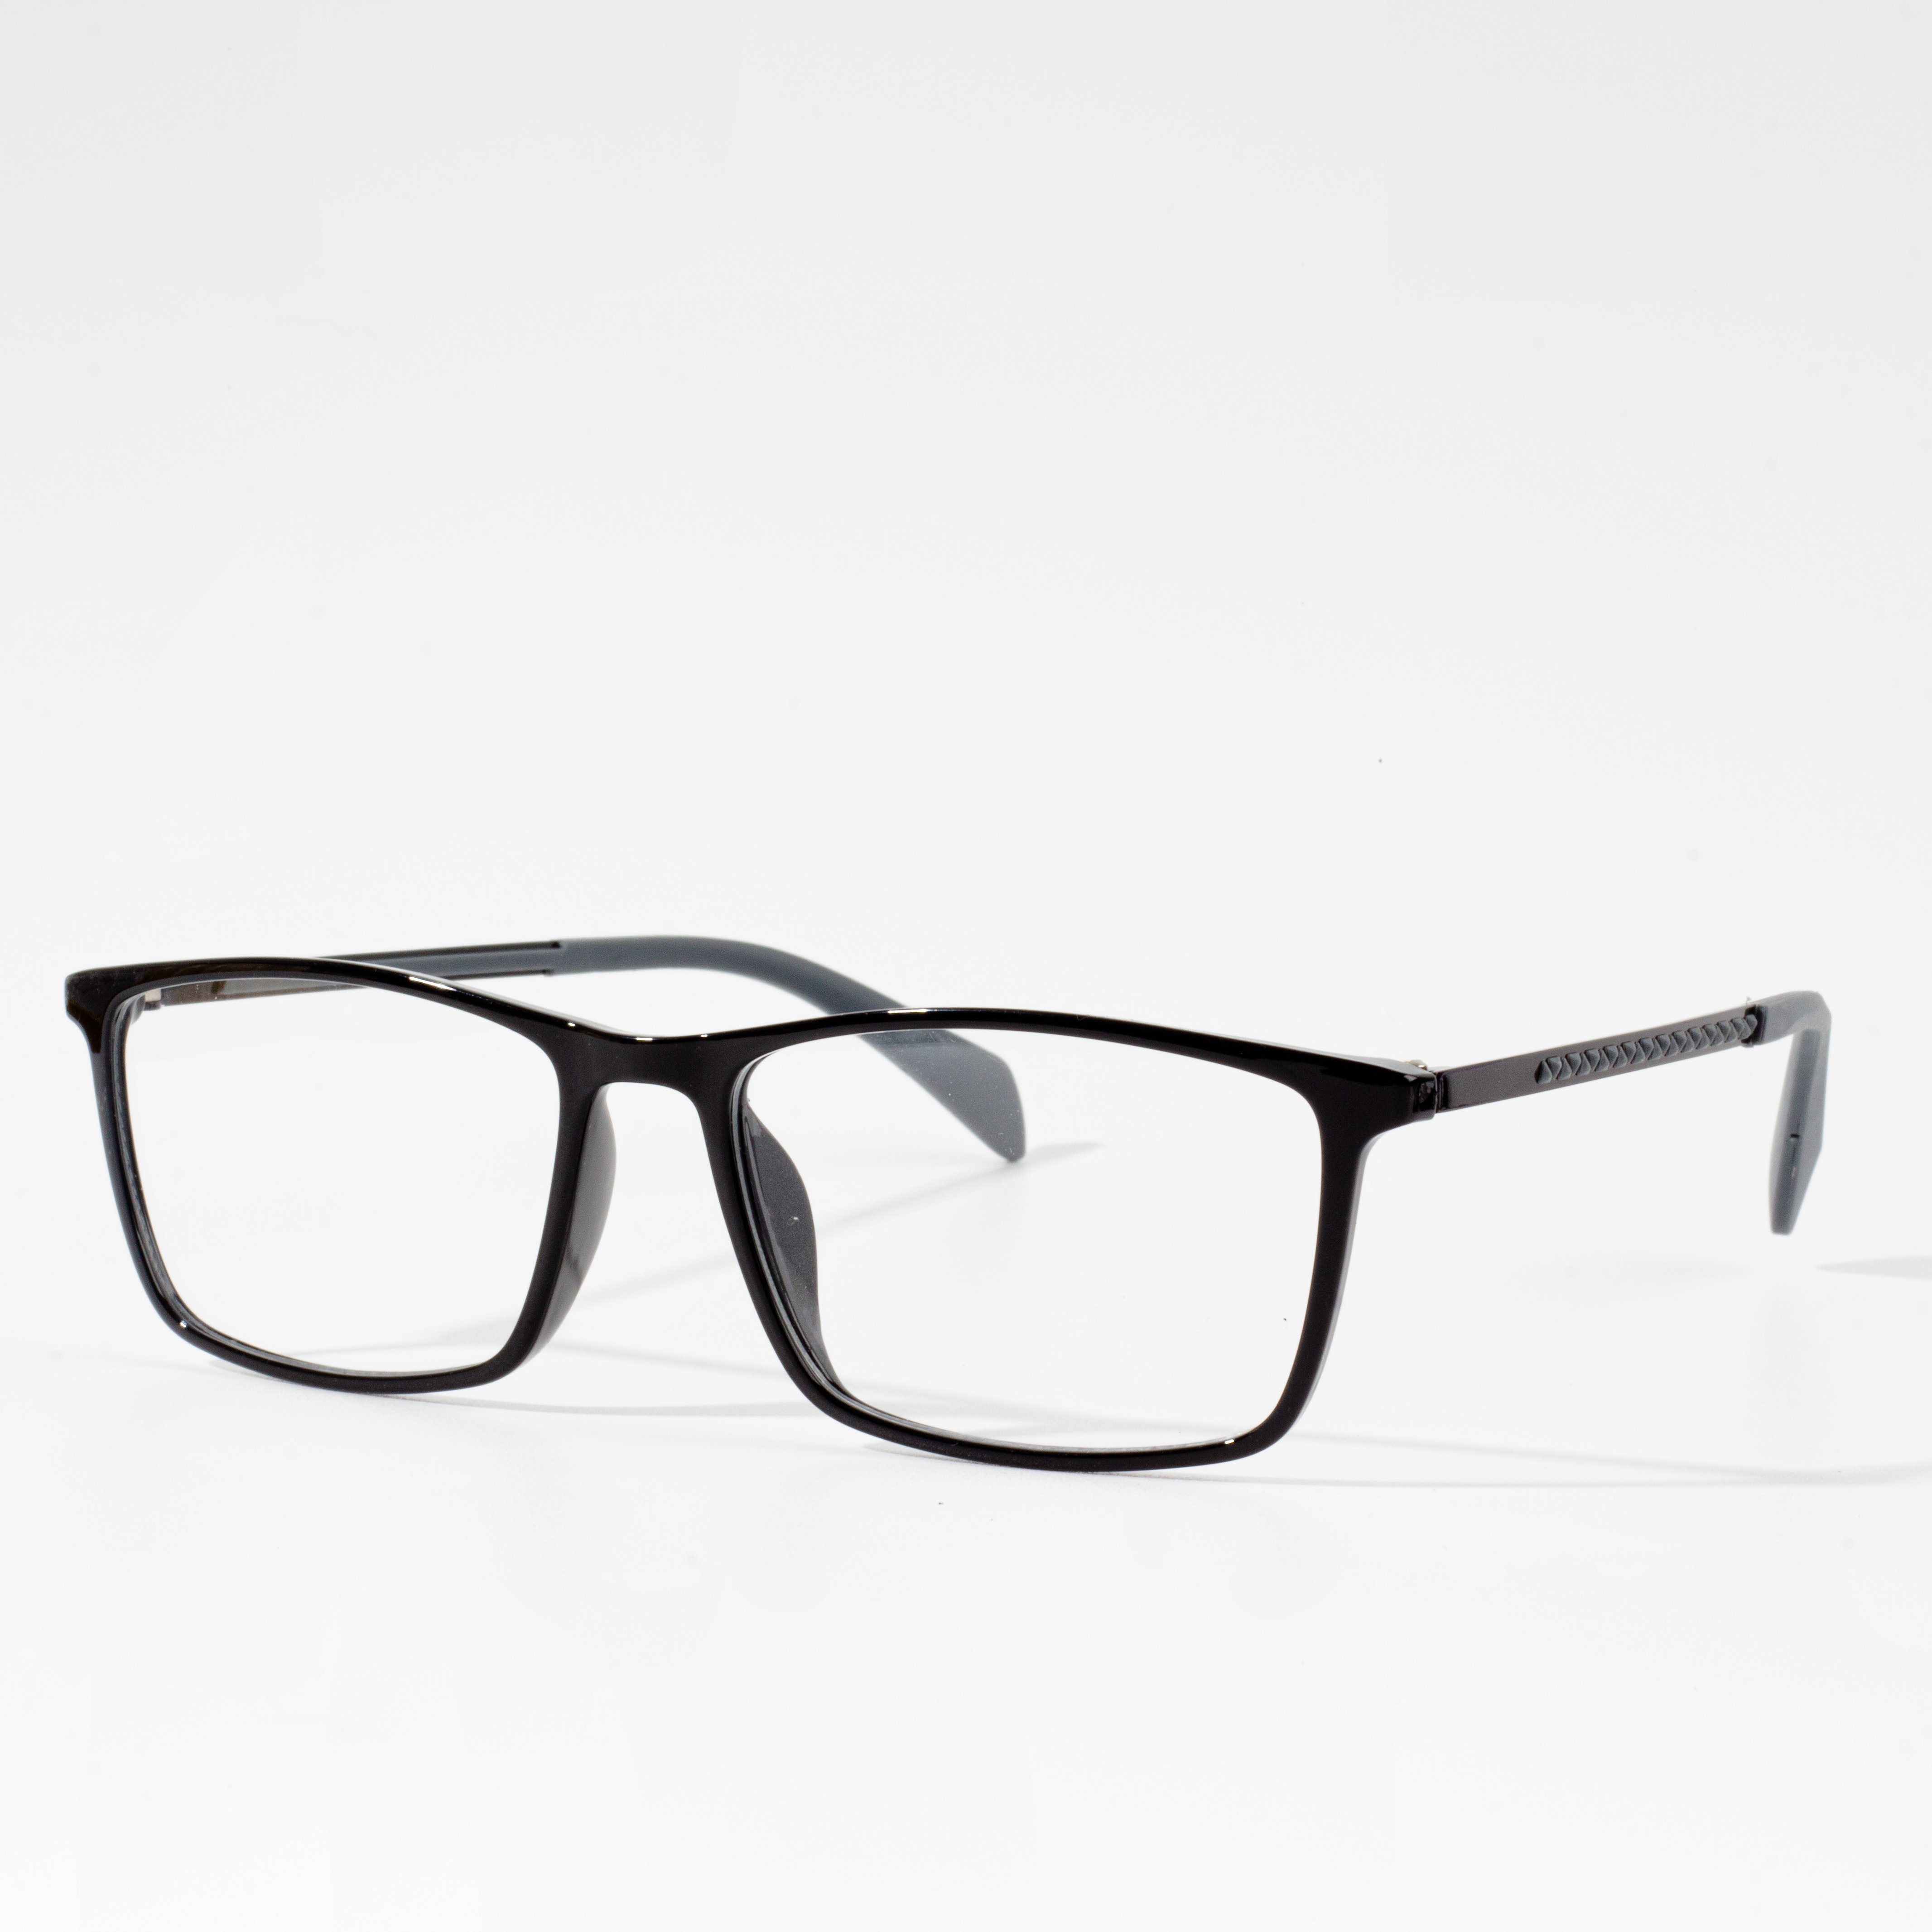  eyeglass frame